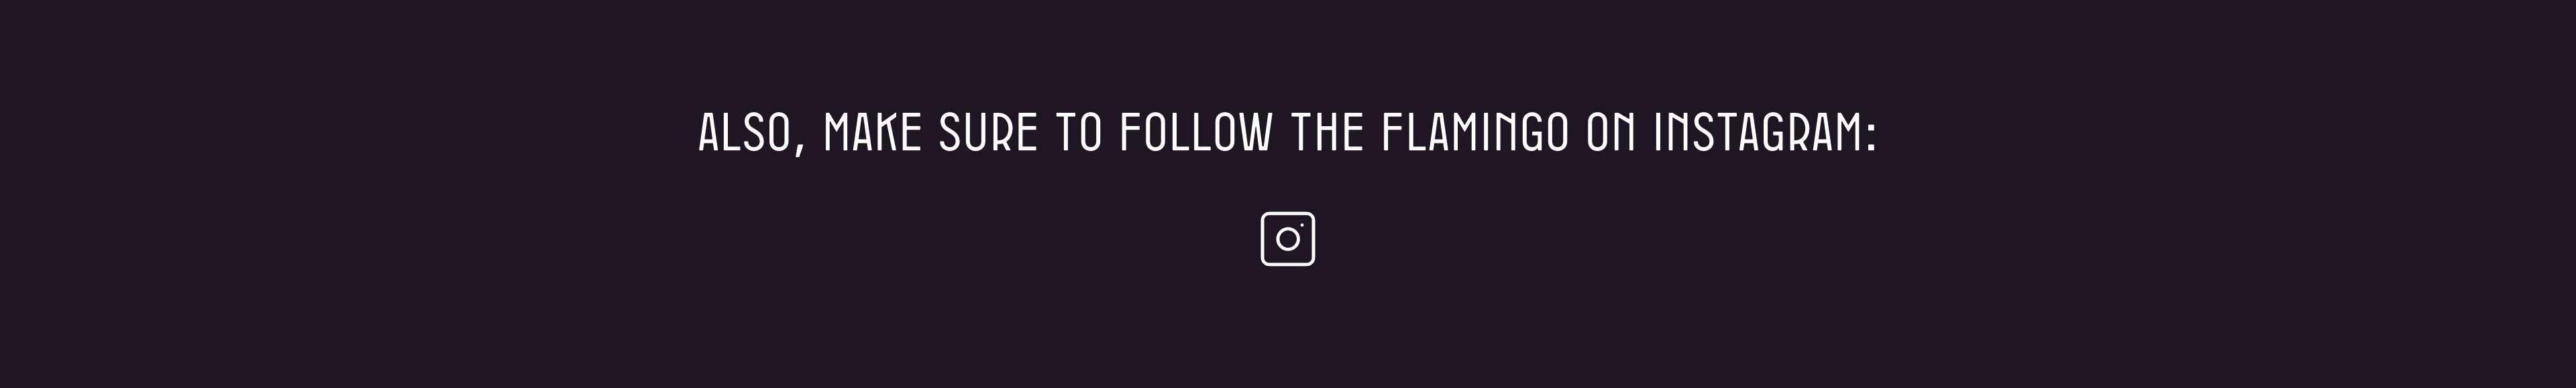 Also, make sure to follow the flamingo on instagram: @blackflamingo_theoriginal